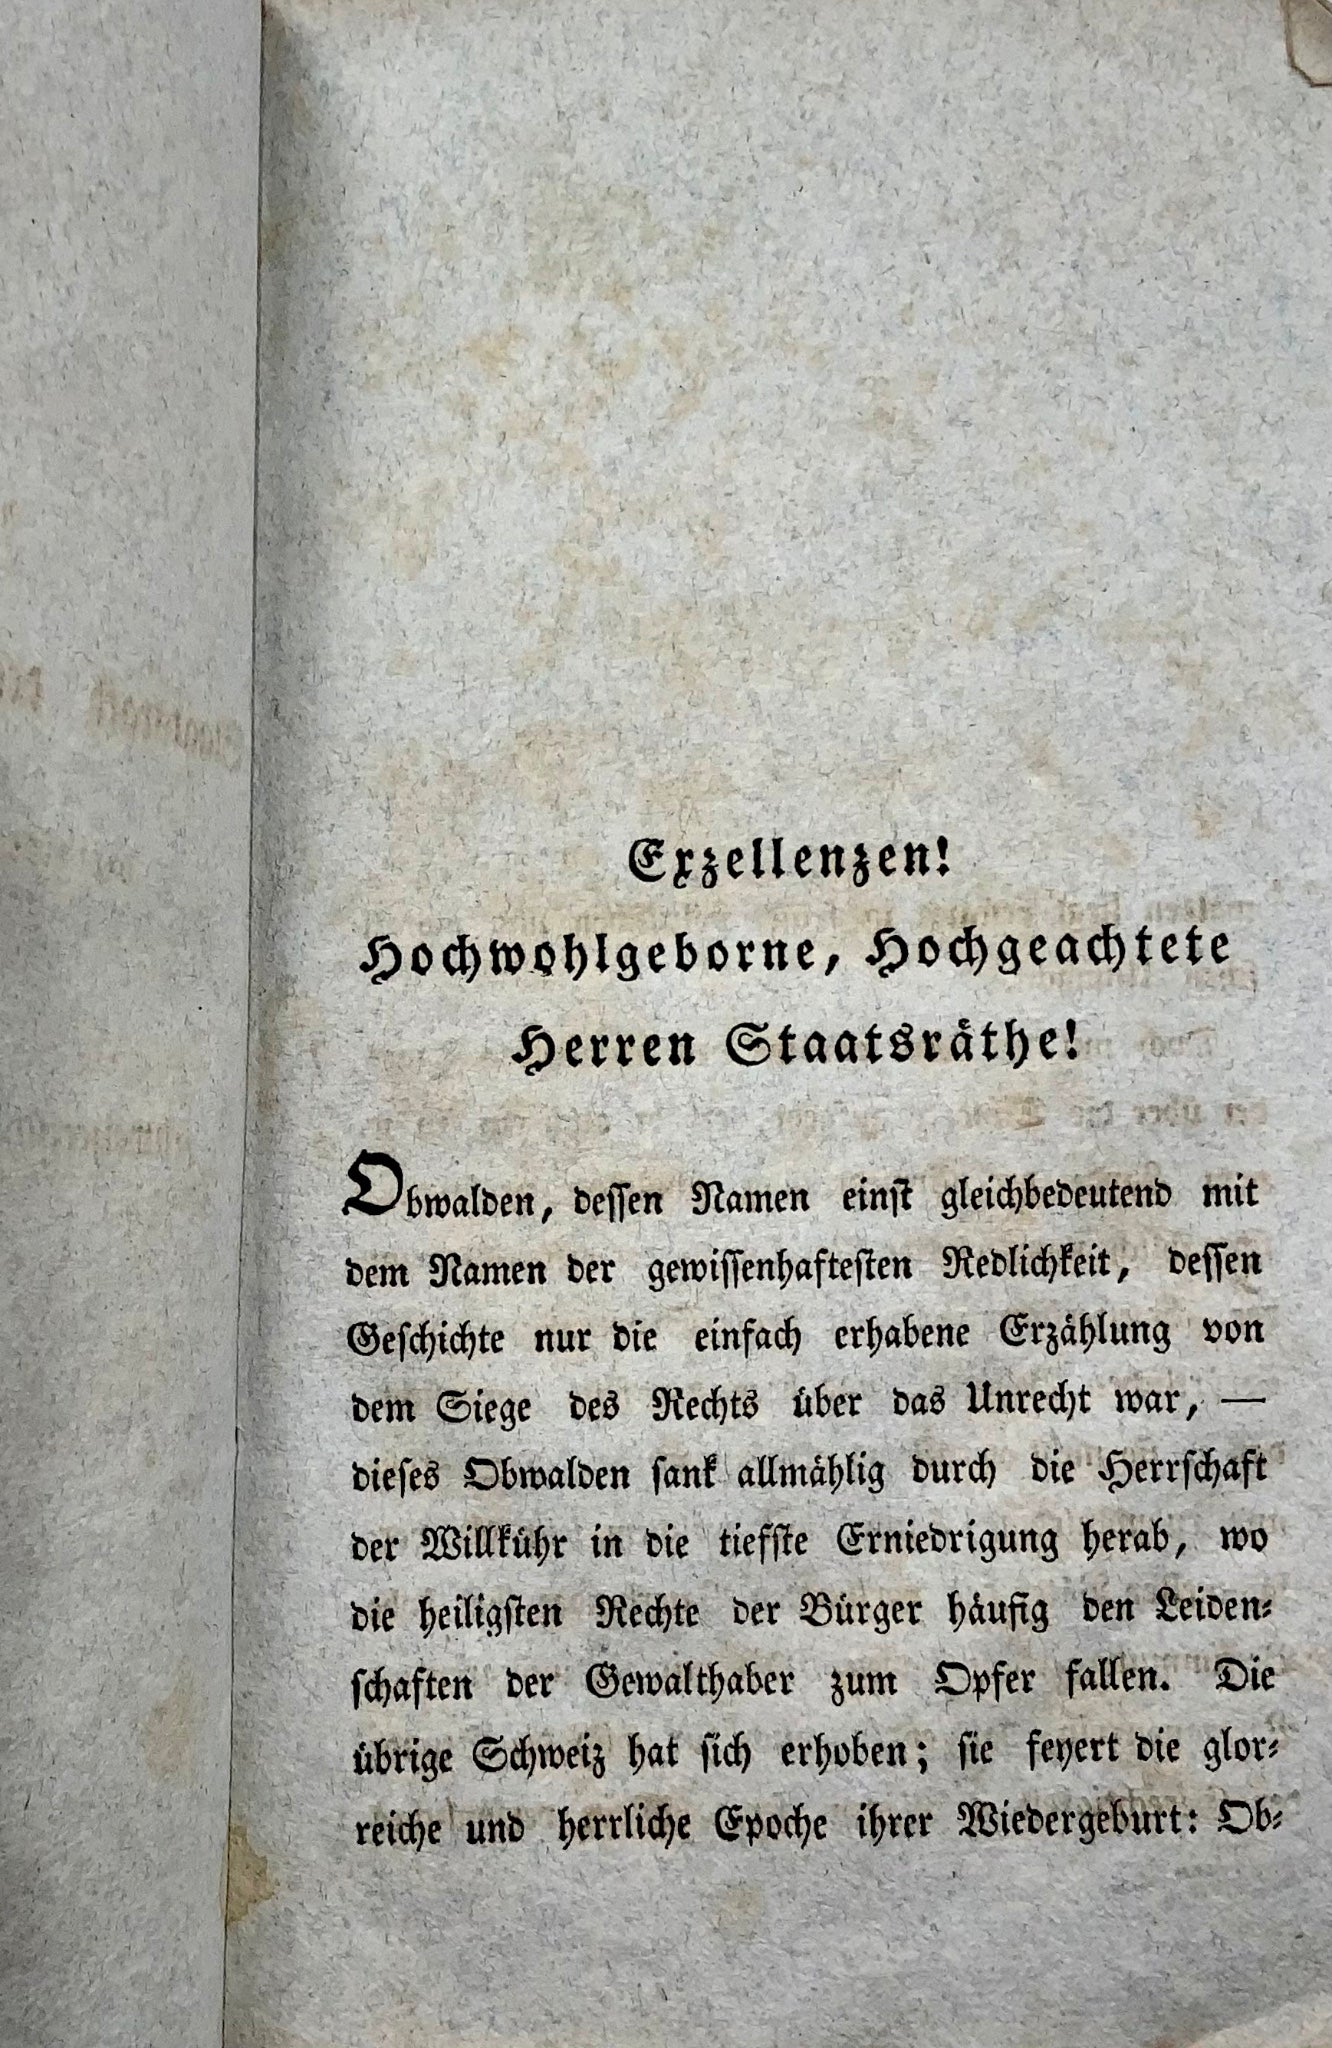 1831 Polemical work against the prevailing politics in Obwalden, Switzerland, pamphlet